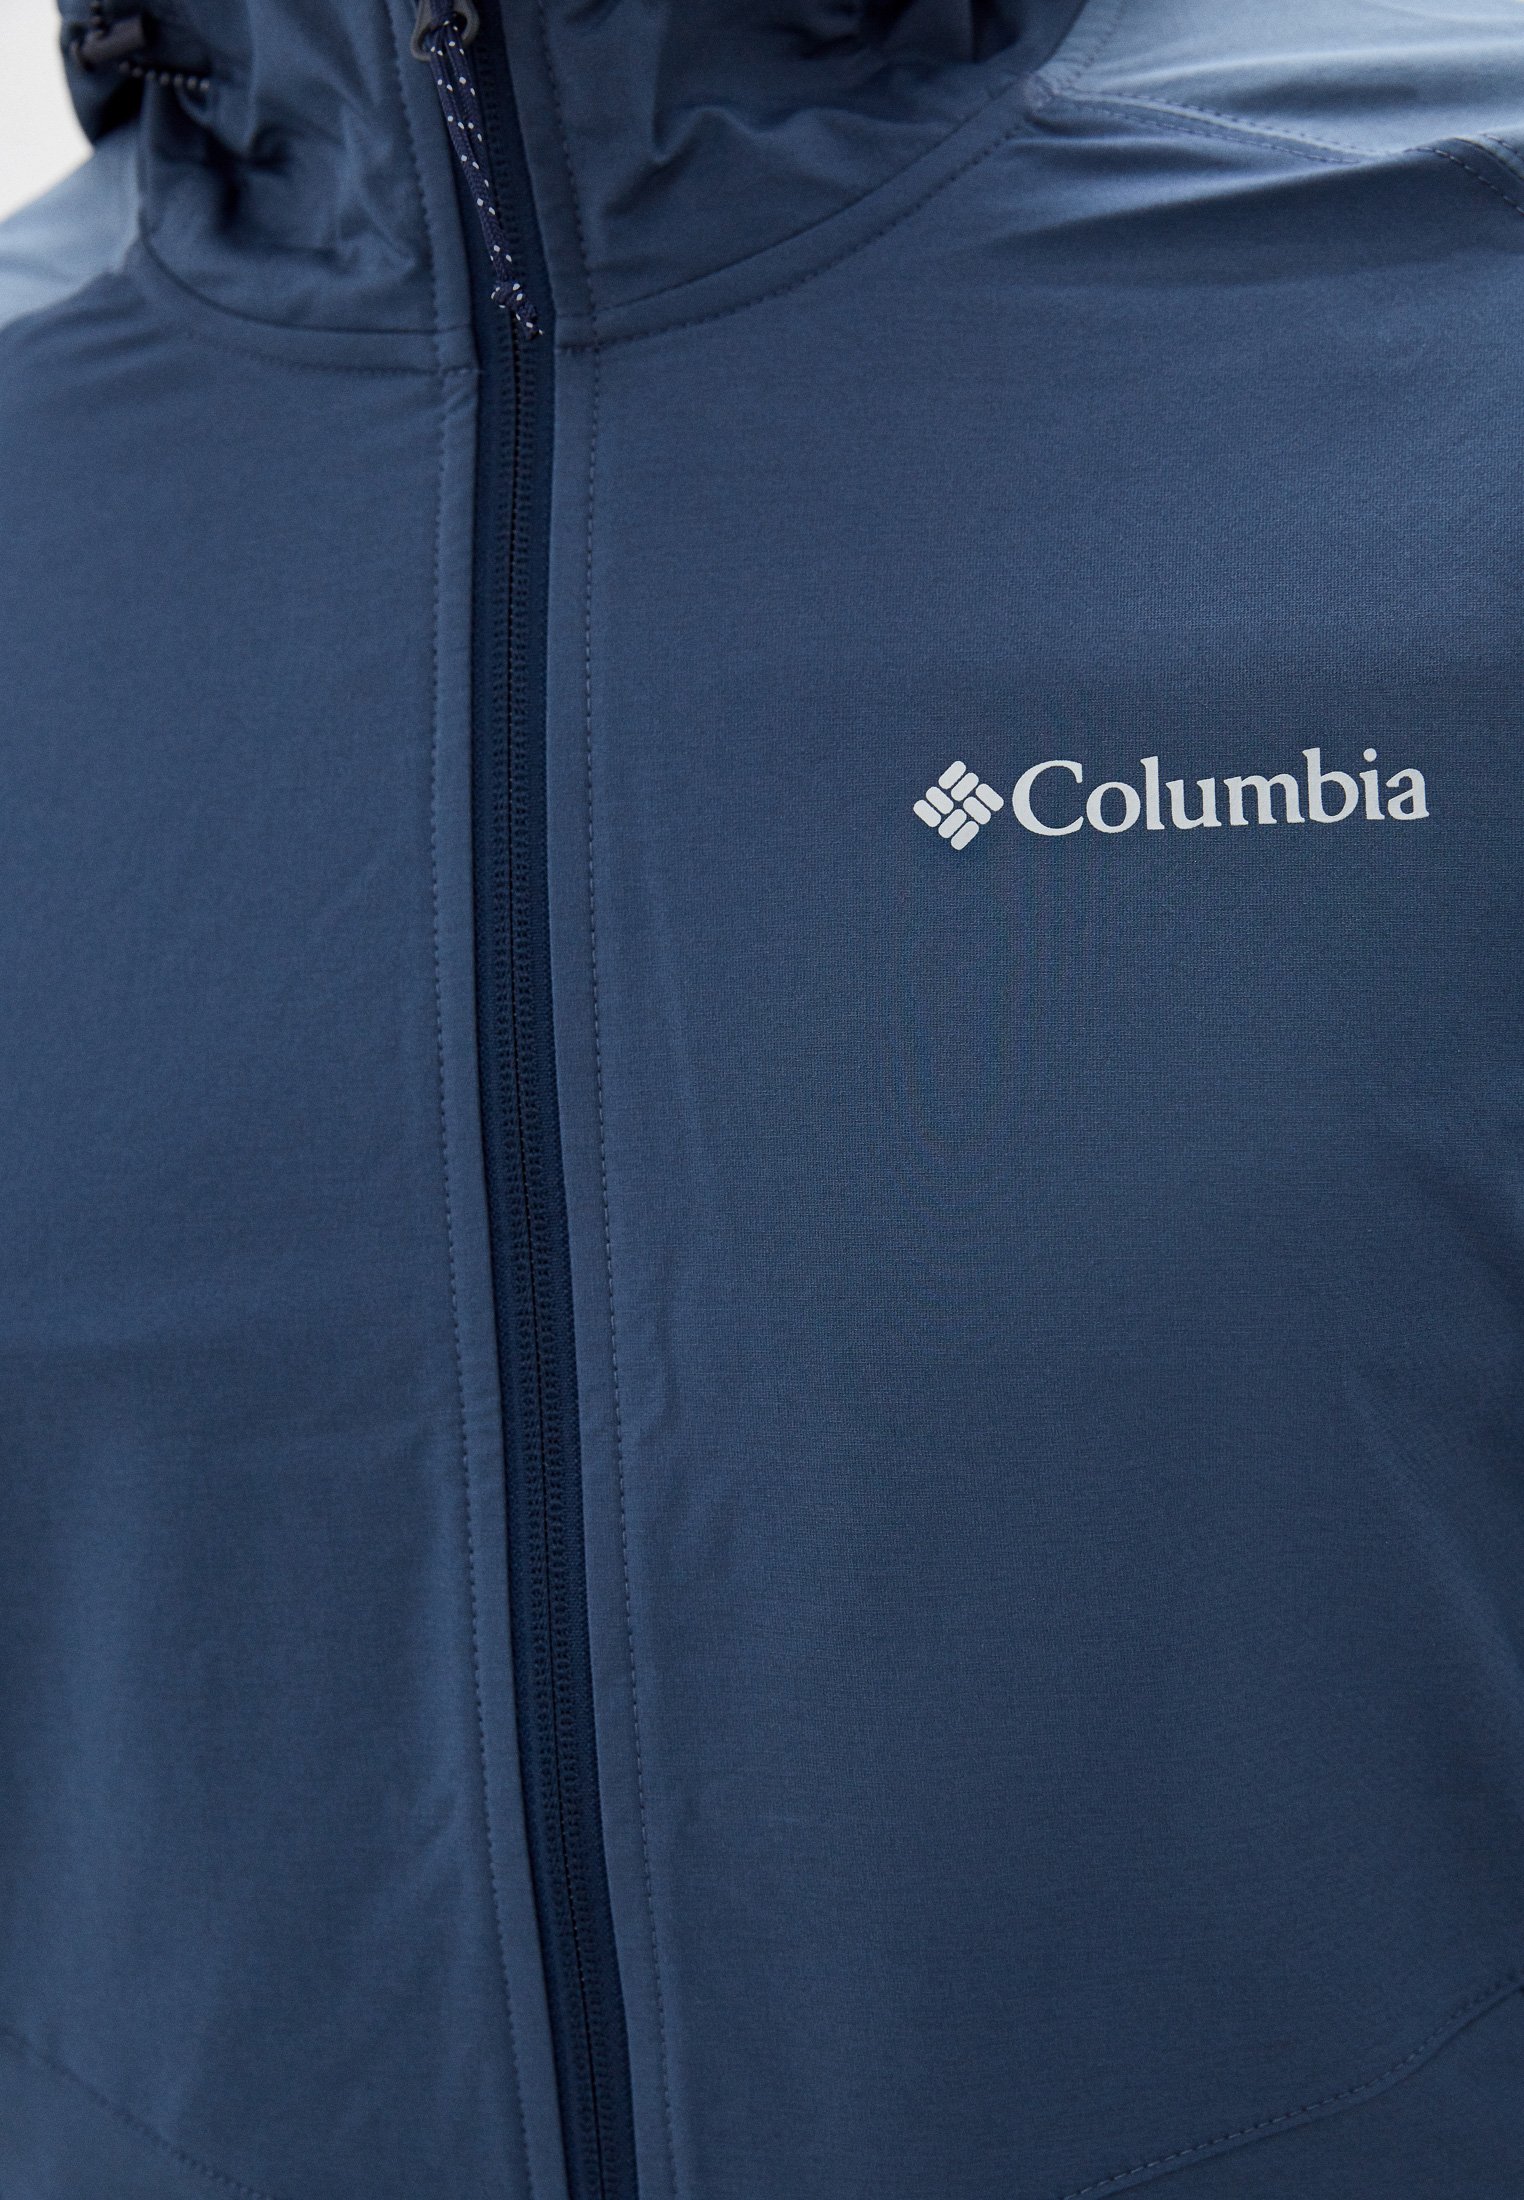 Коламбия чья. Ветровки Columbia 2020 мужская. Columbia костюмы Colmax. Columbia артикул s3. Columbia WB 1022.